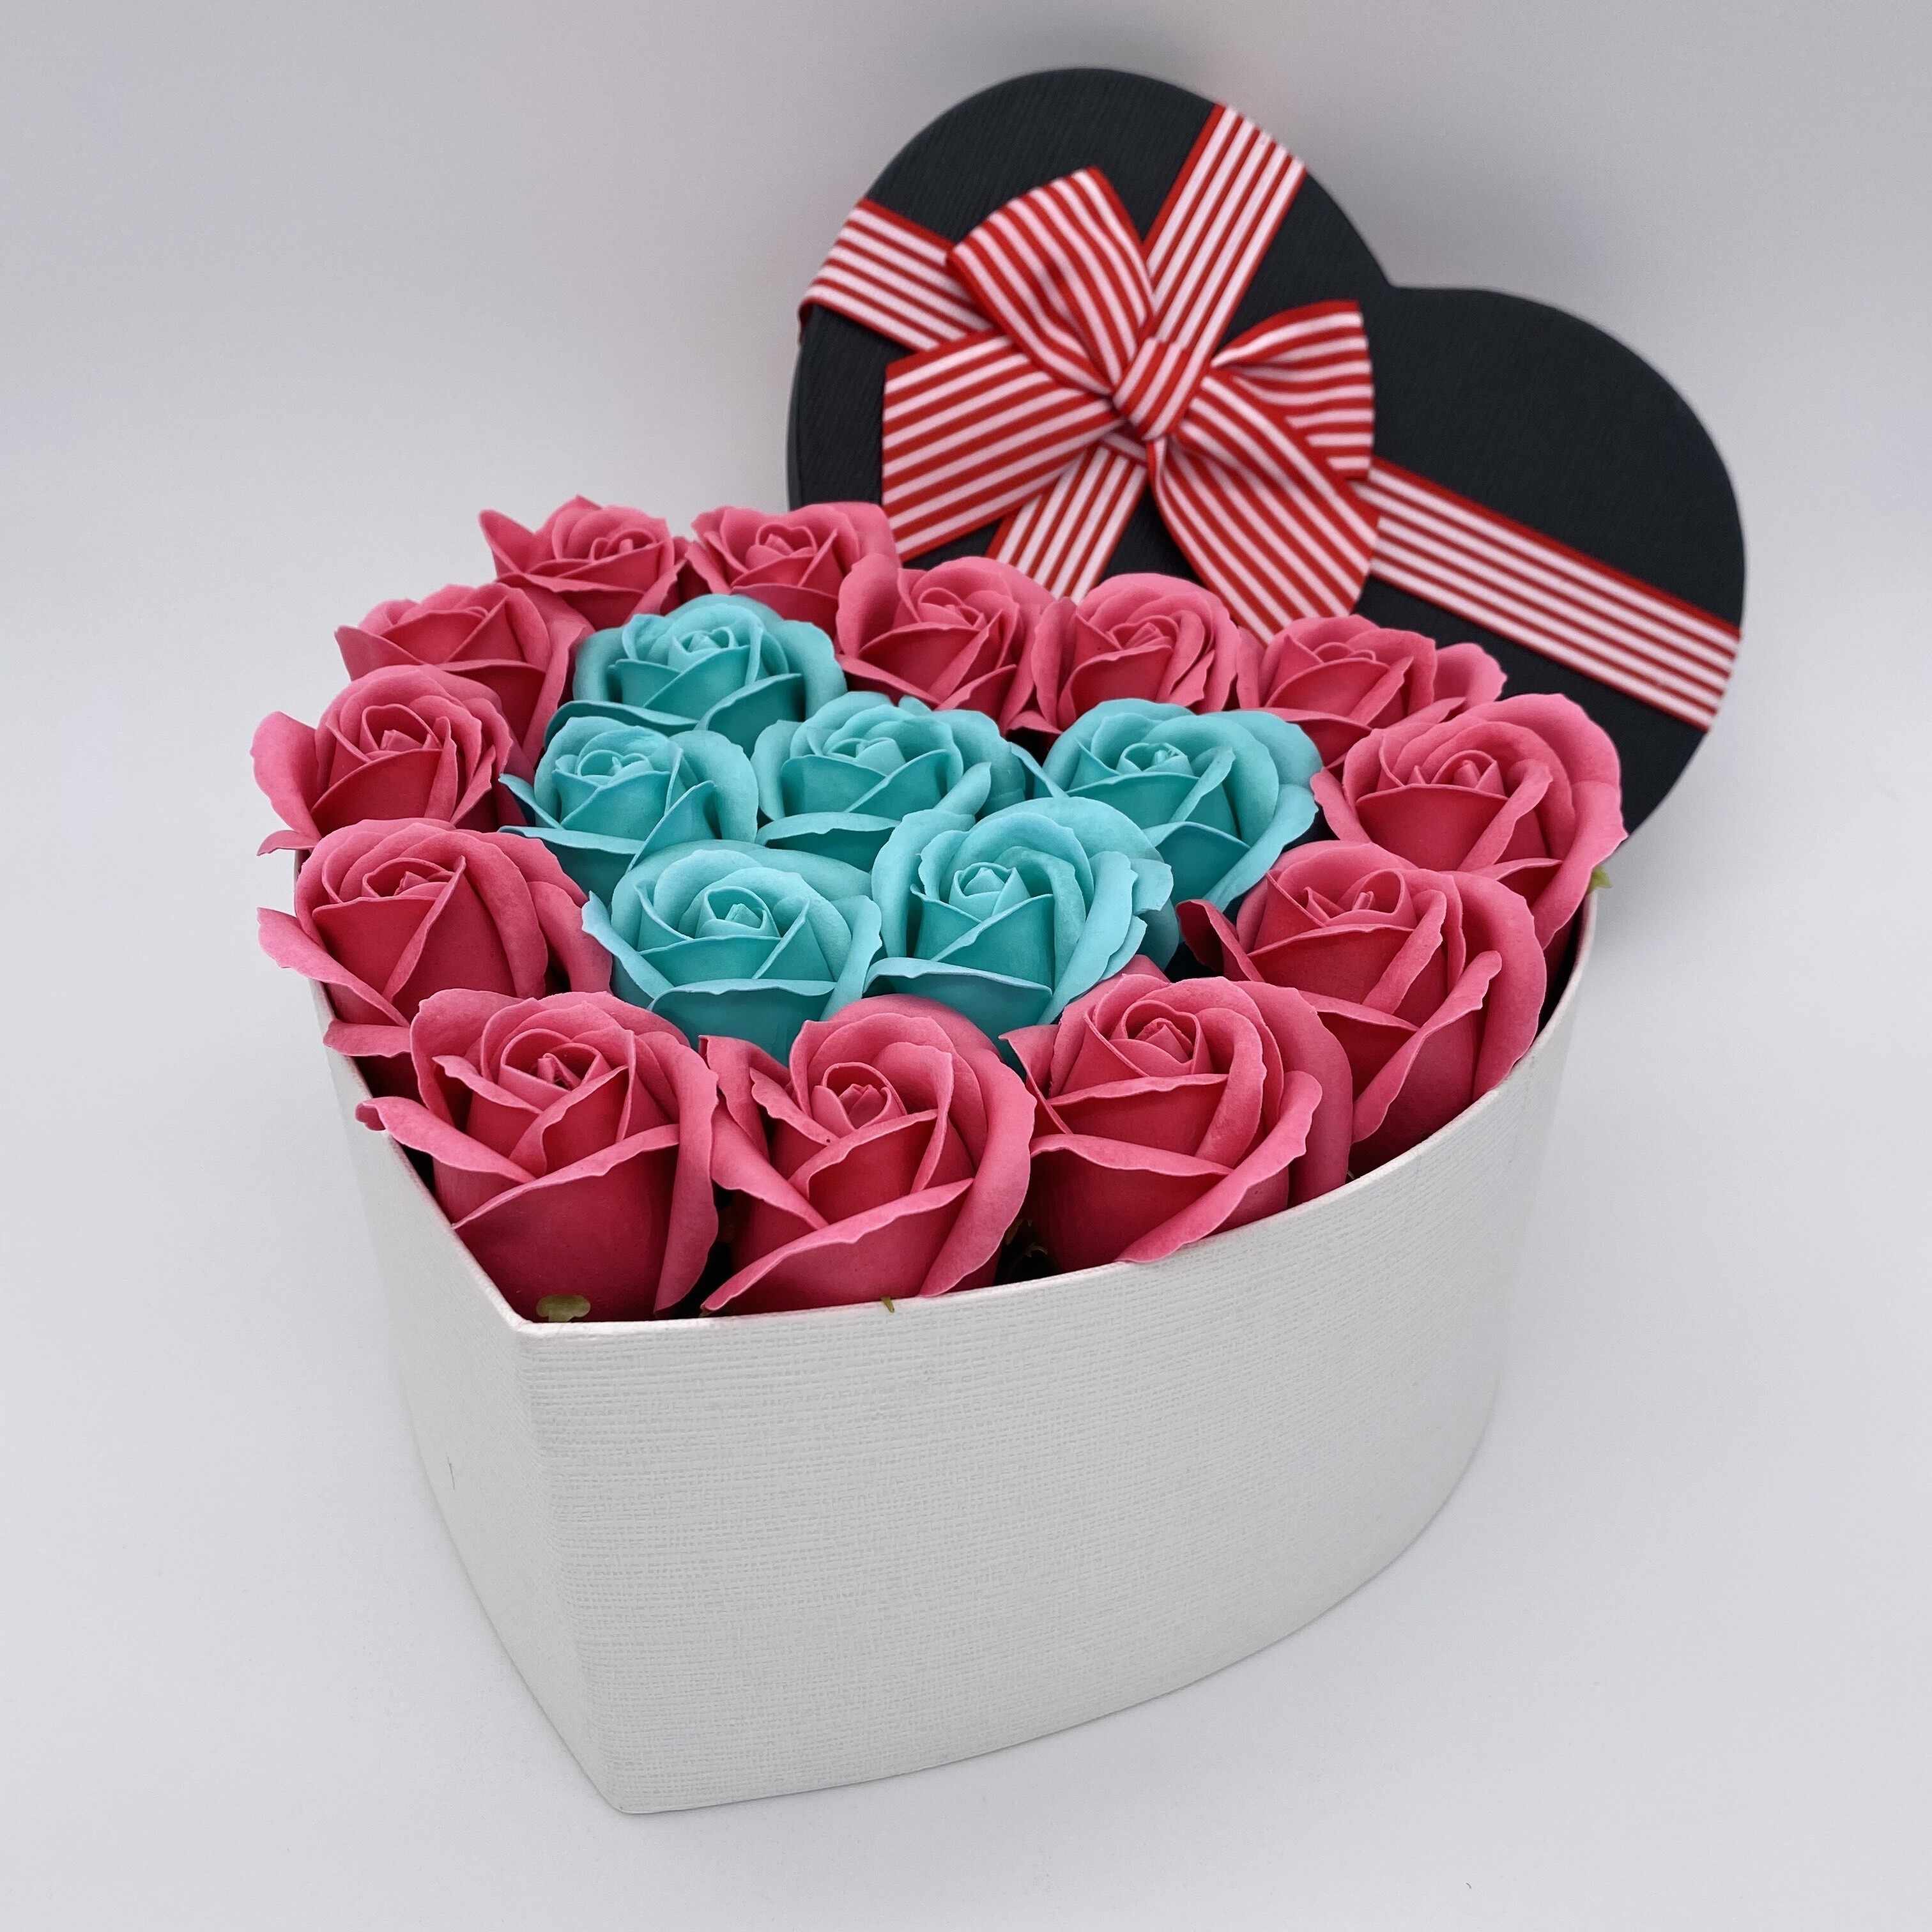 Aranjament Floral in forma de Inima, 25 Trandafiri Turcoaz/Roz, Cutie cu Funda, Mediu